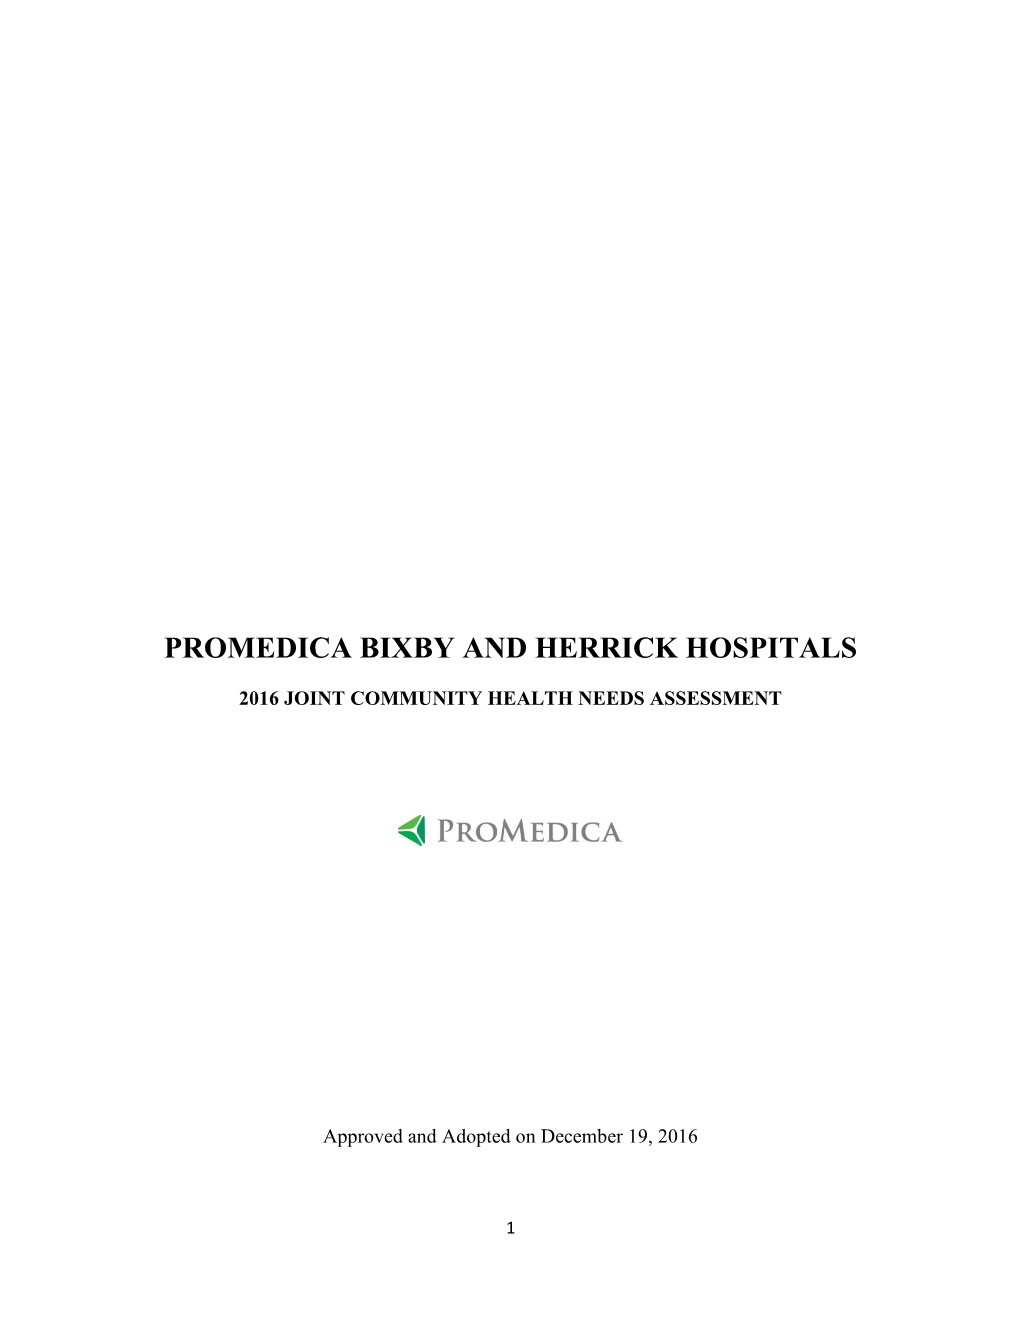 Promedica Bixby and Herrick Hospitals